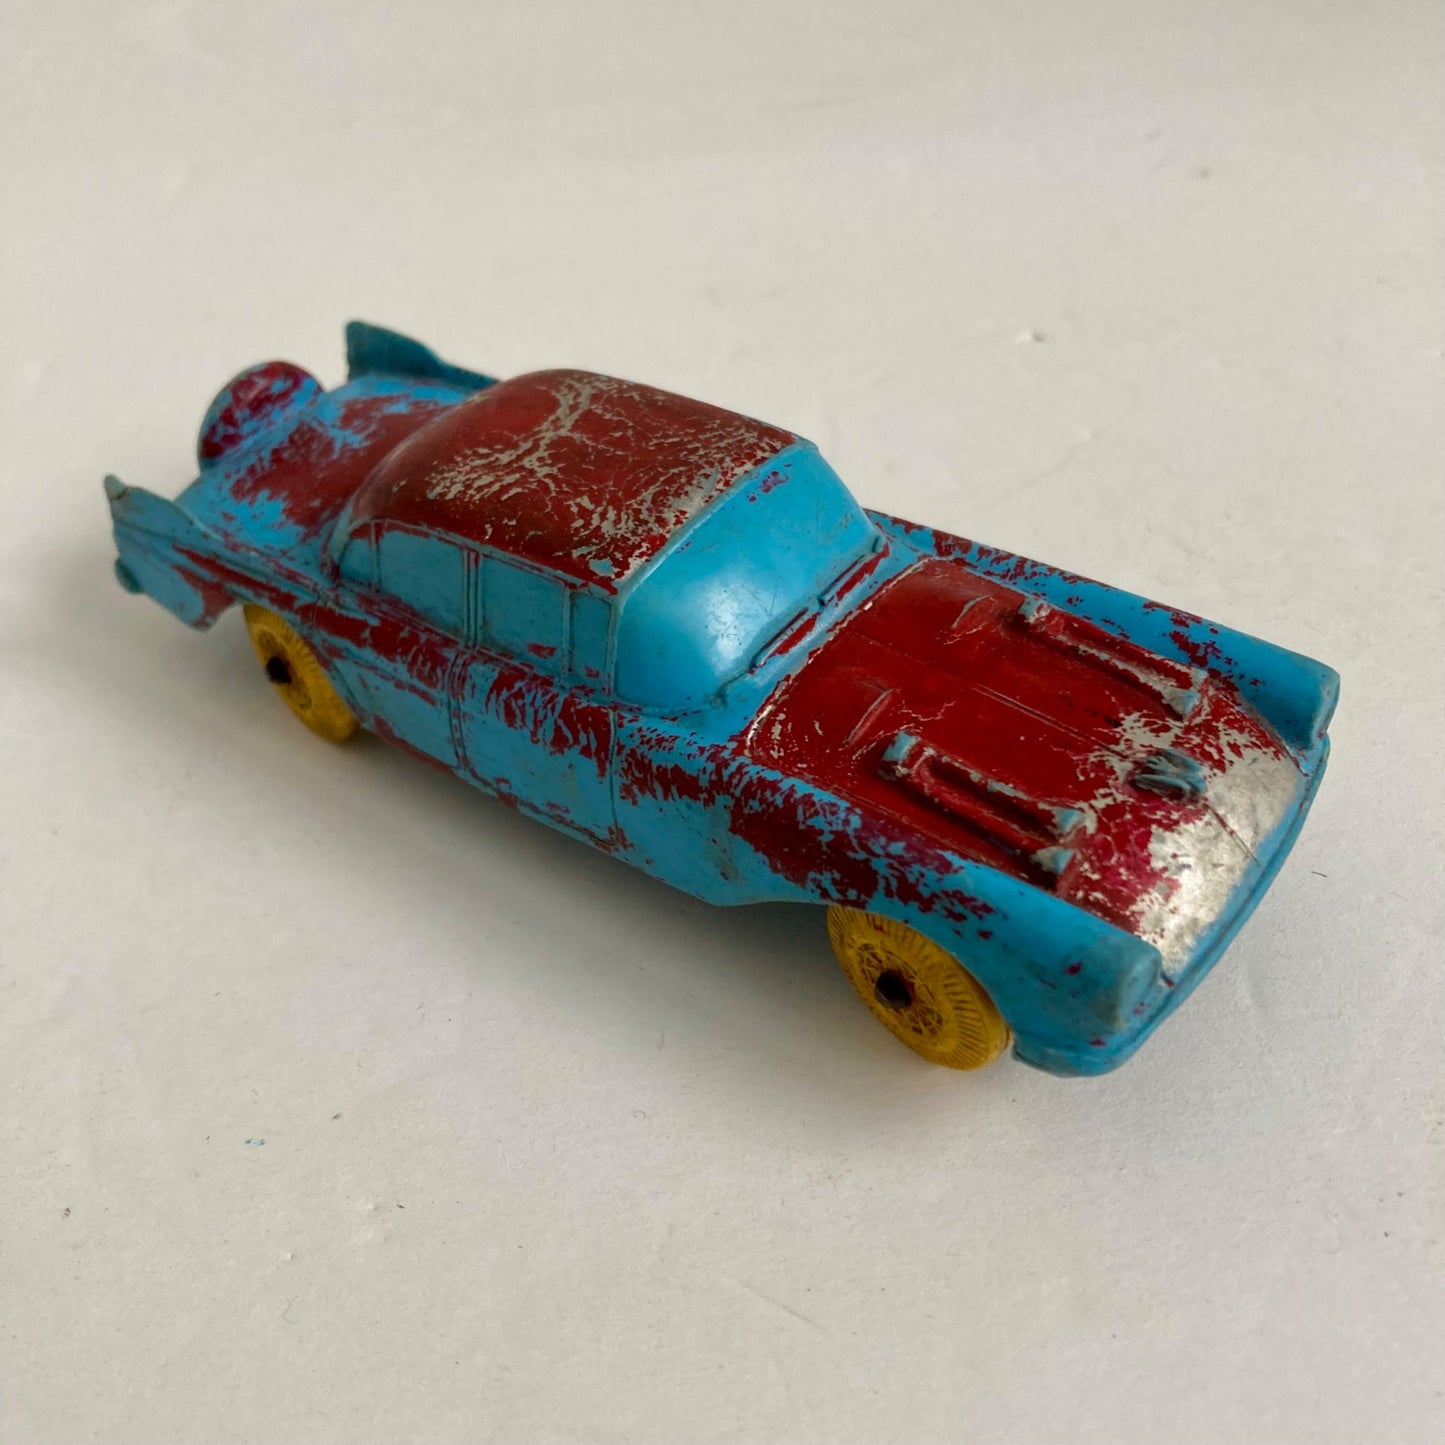 Vintage Auburn Rubber Toy Car 1950's Blue Red